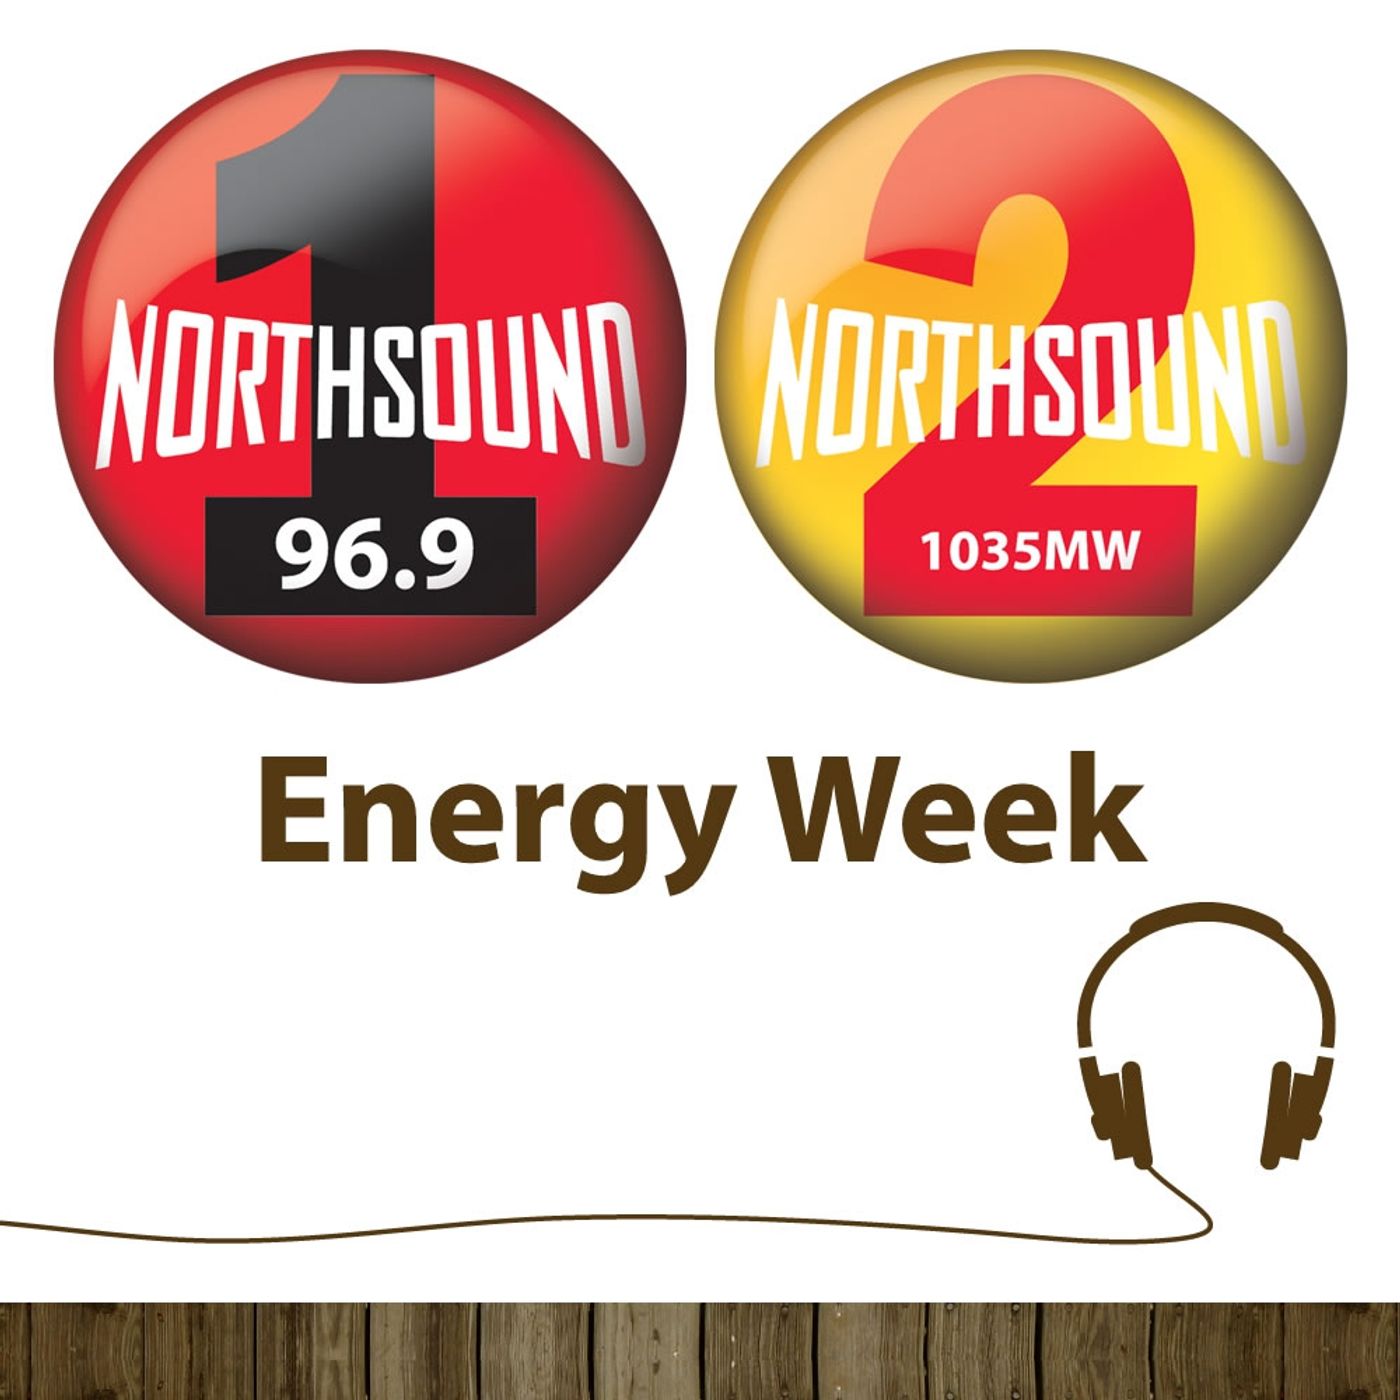 Northsound Energy Week 29/11/13